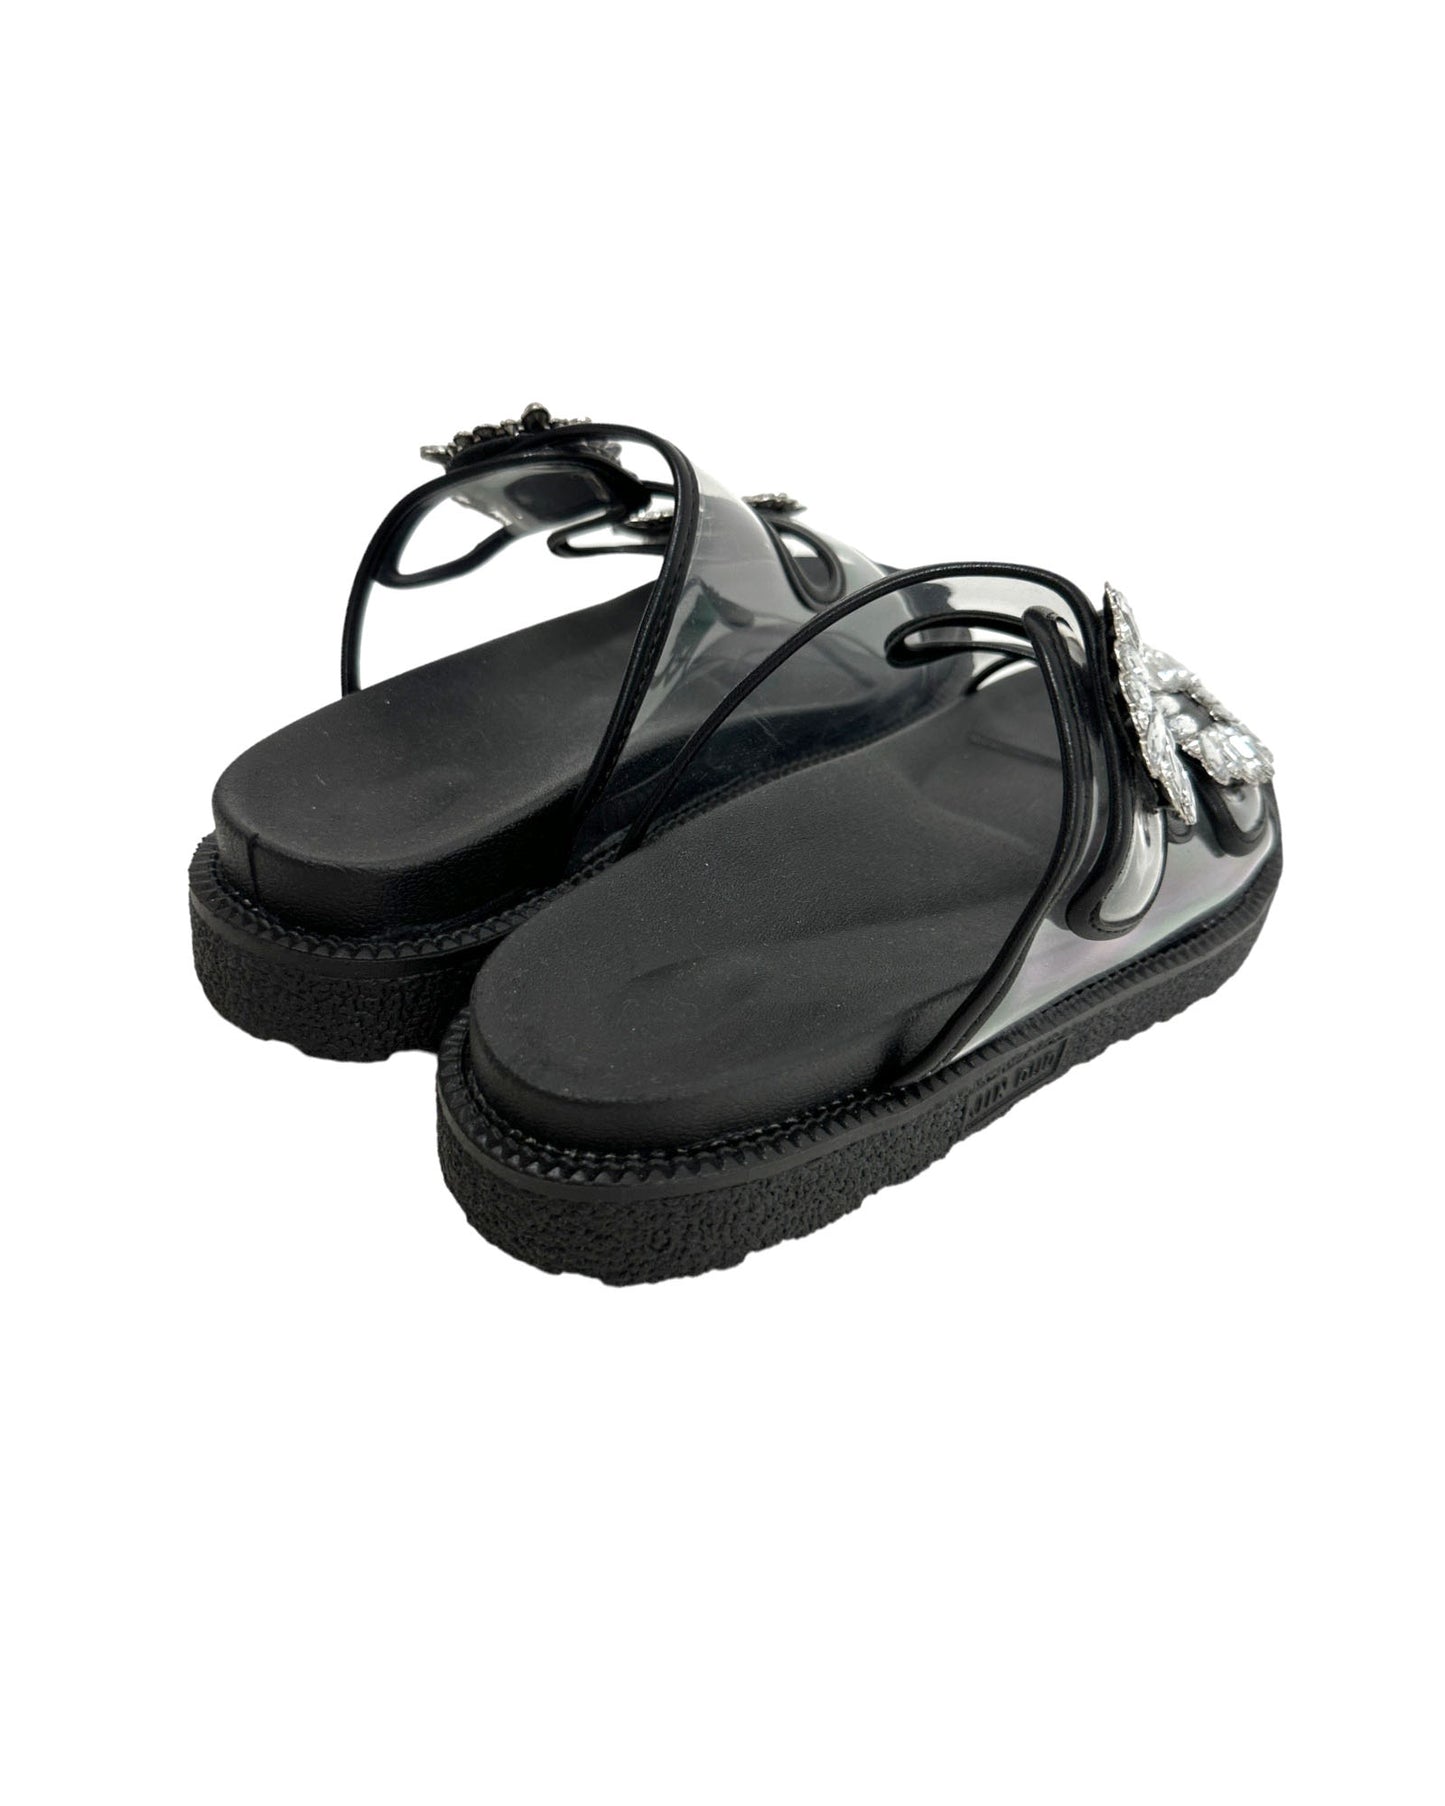 black diamonds buckles PVC strappy sandals *pre-order*